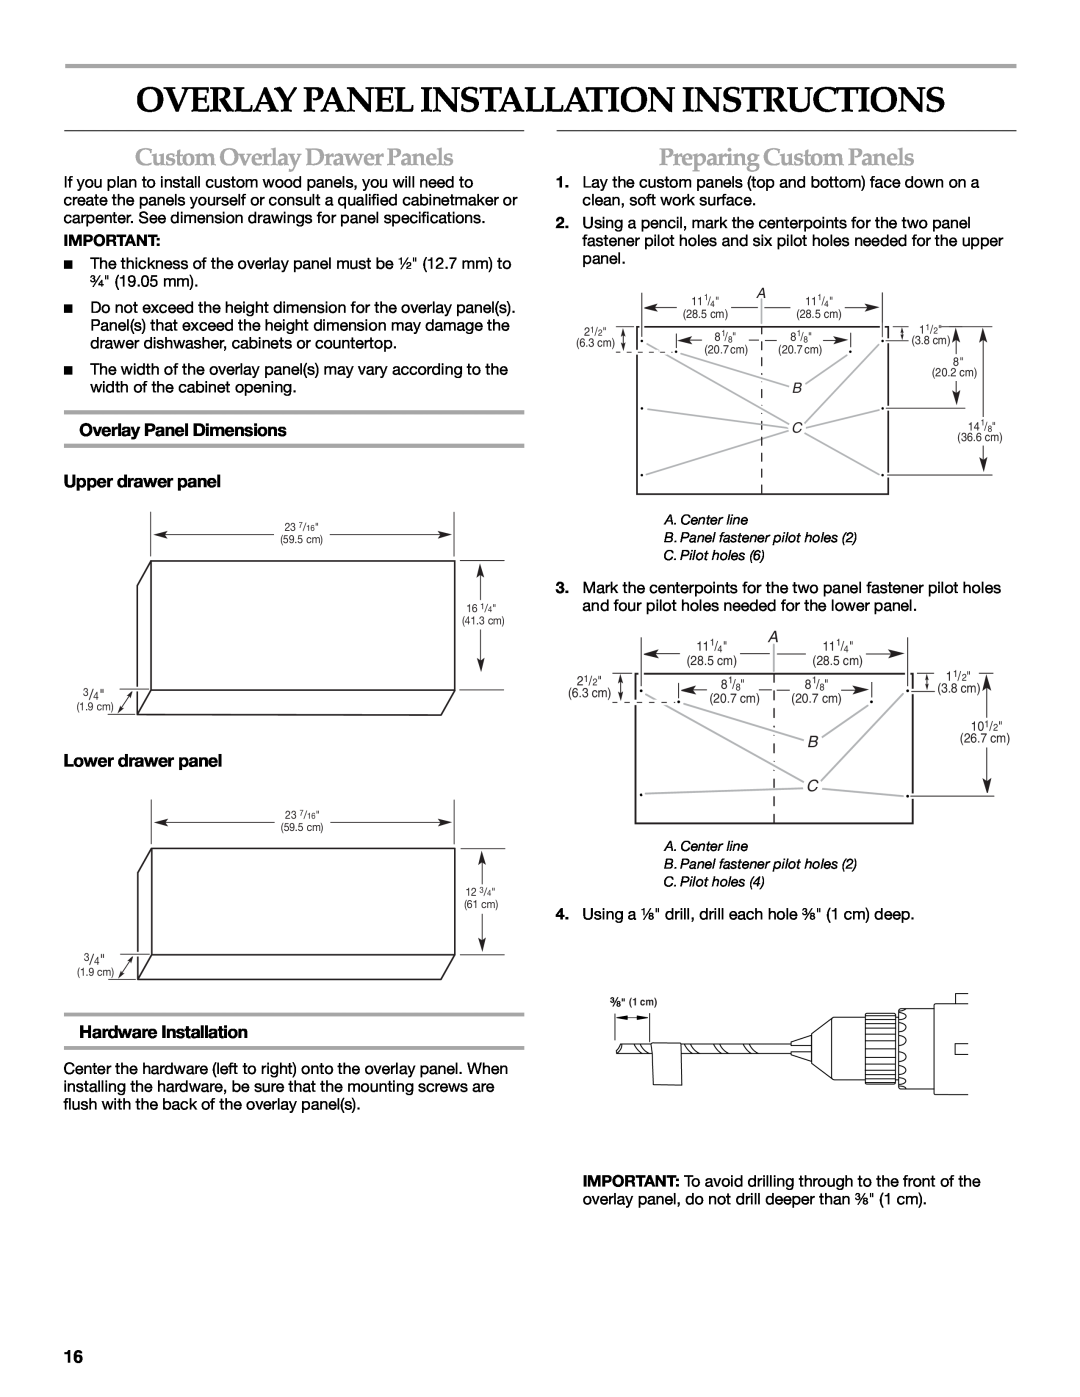 KitchenAid W10118037B Overlay Panel Installation Instructions, Custom Overlay Drawer Panels, Preparing Custom Panels 